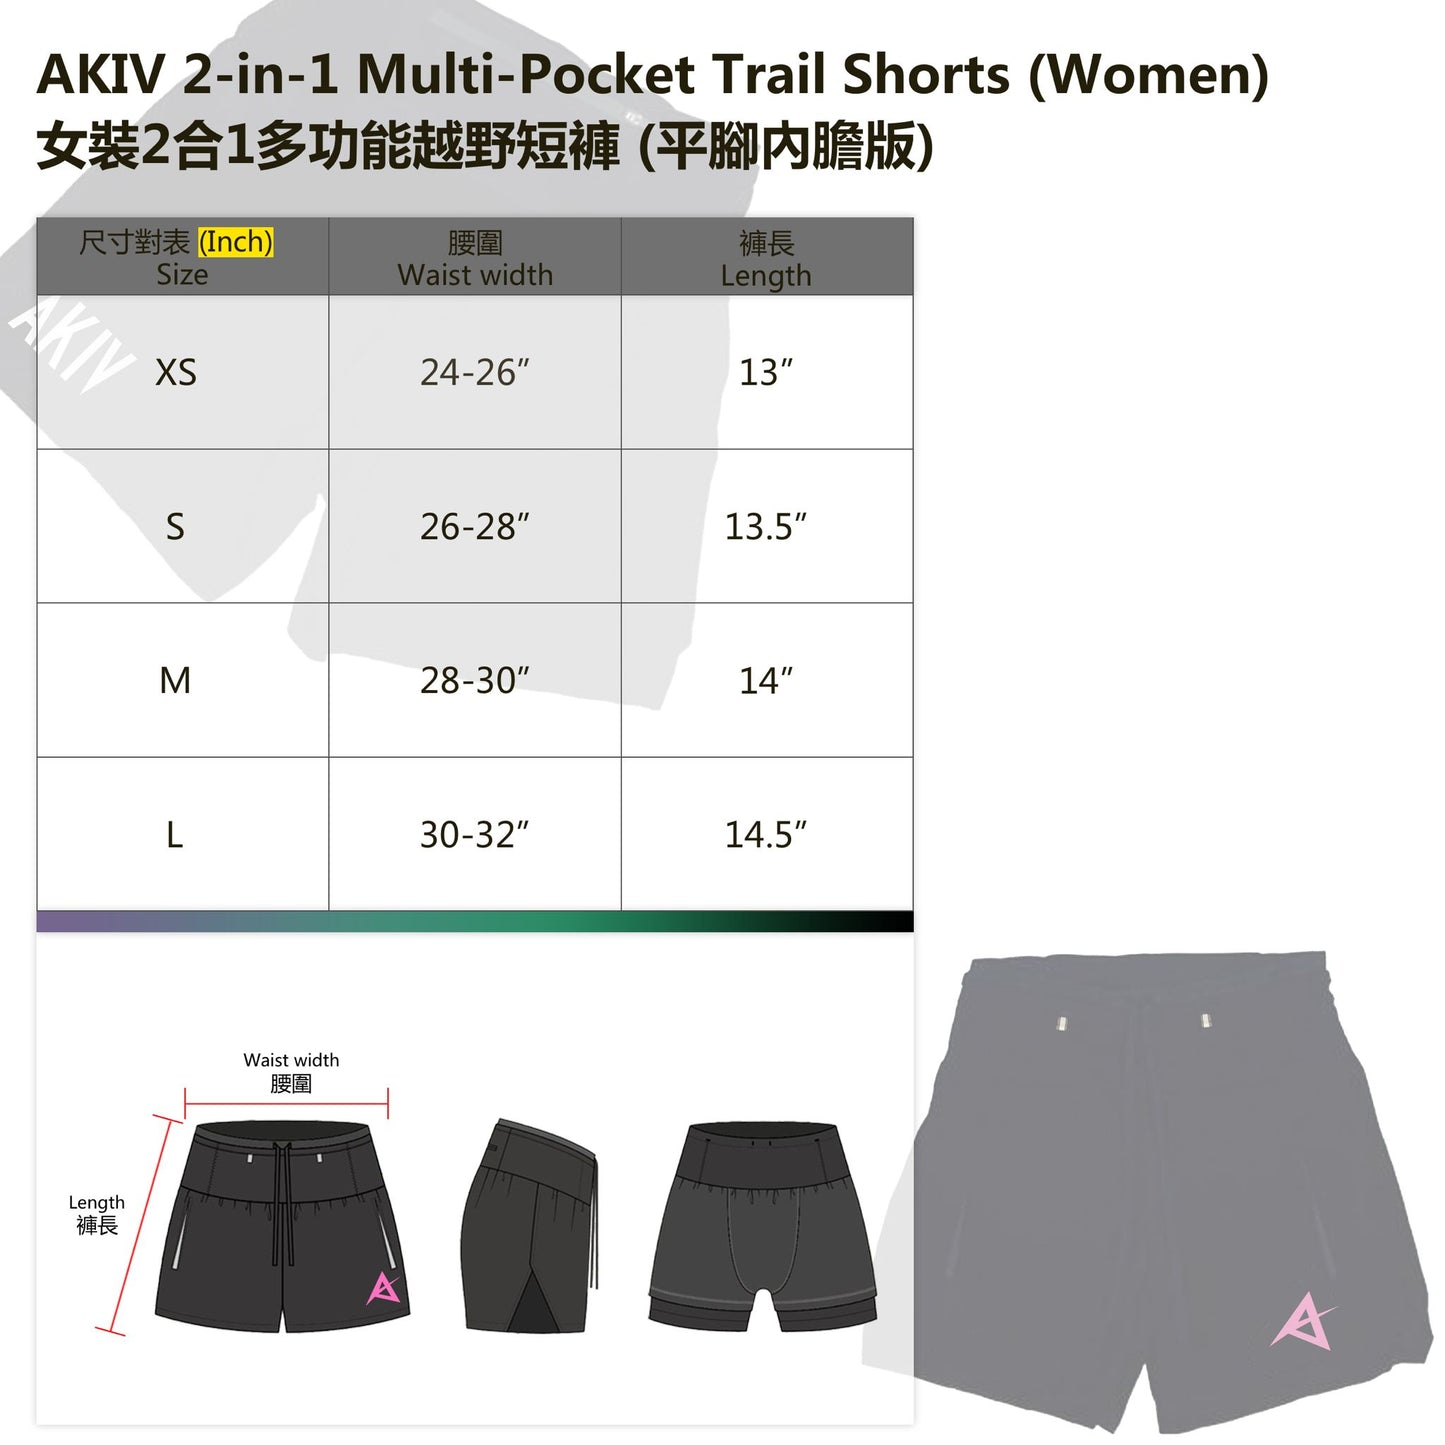 【Trail】 AKIV 2-in-1 TRAIL RUNNING SHORTS (Women) - BLACK